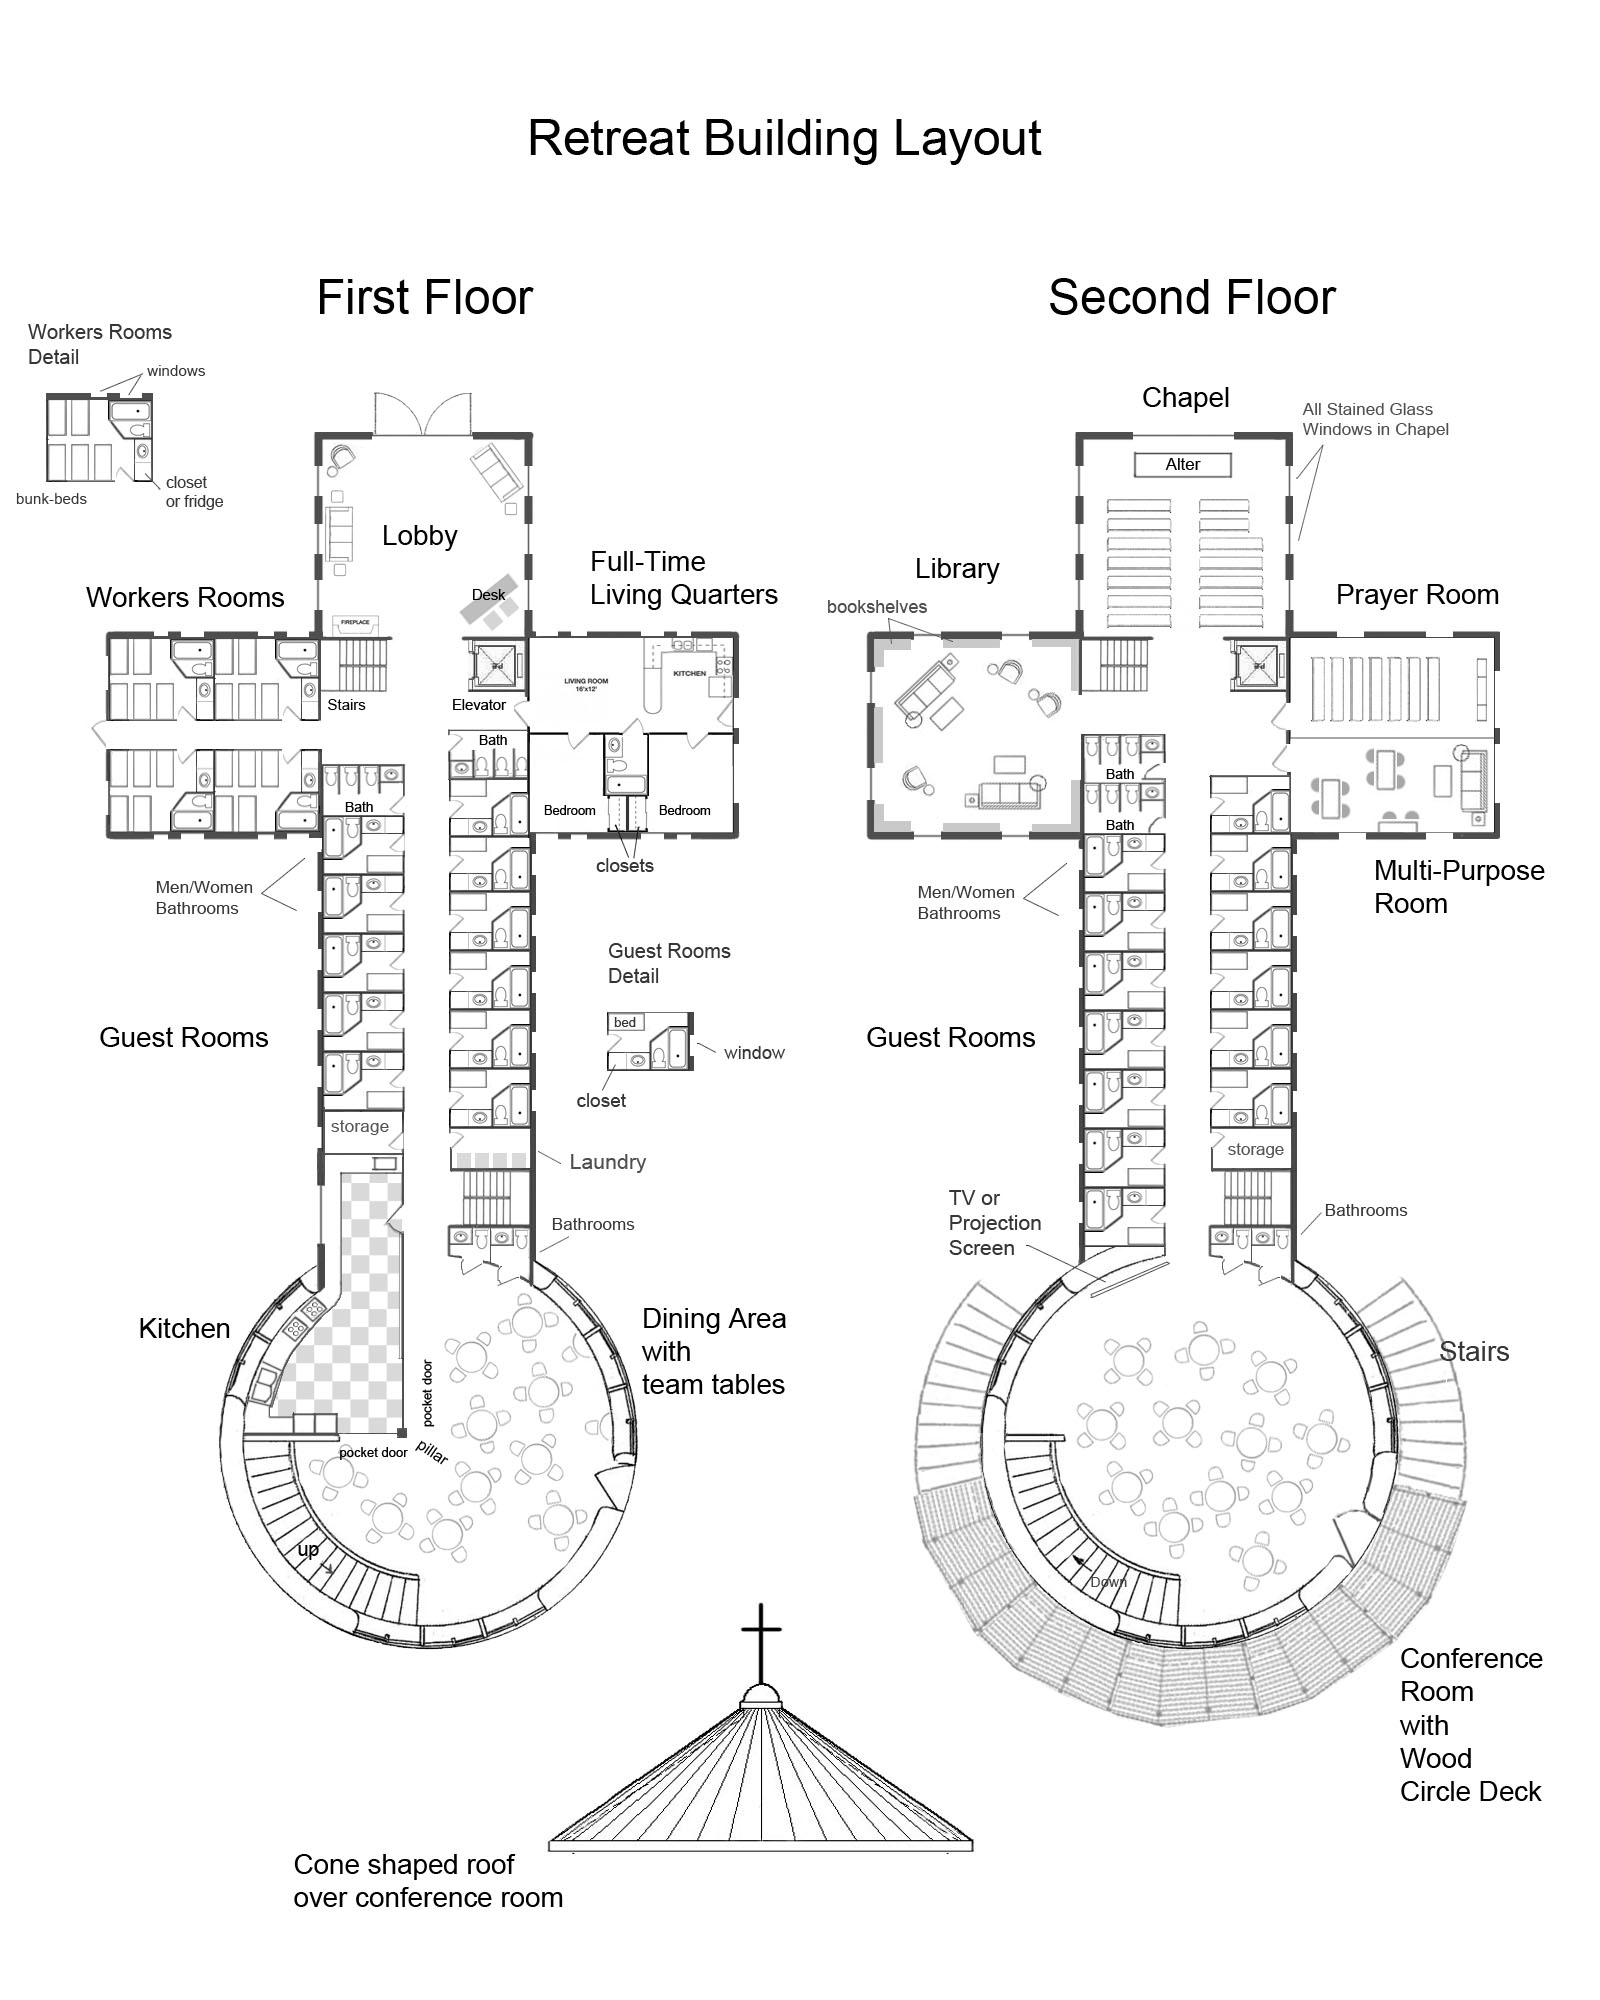 Retreat Building Layout Design 2